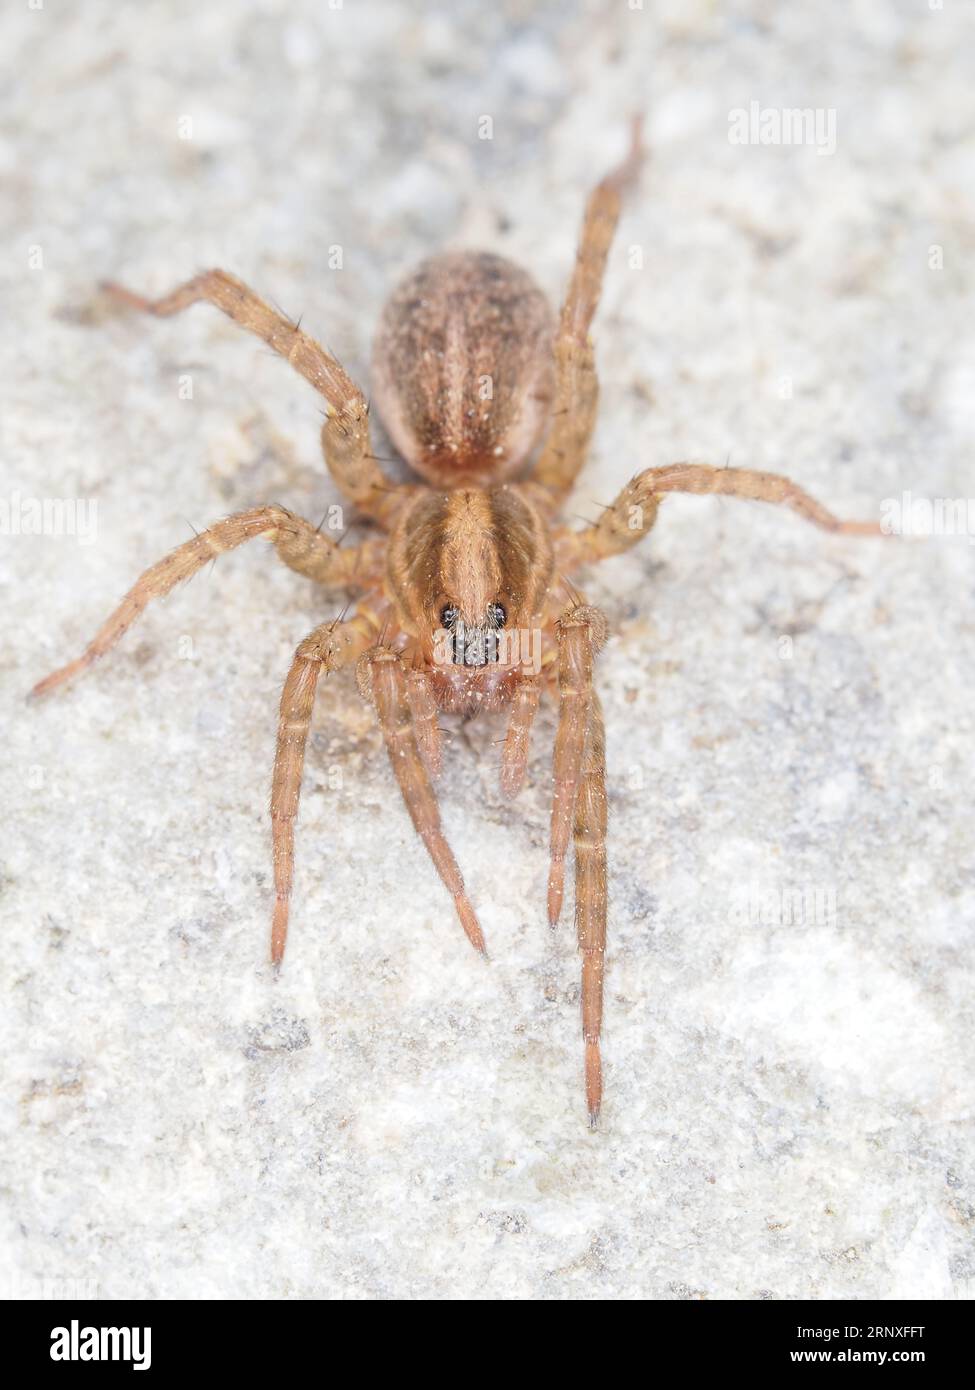 Spider identifiziert als Trochosa sp. - Wolfsspinnenmakro Stockfoto